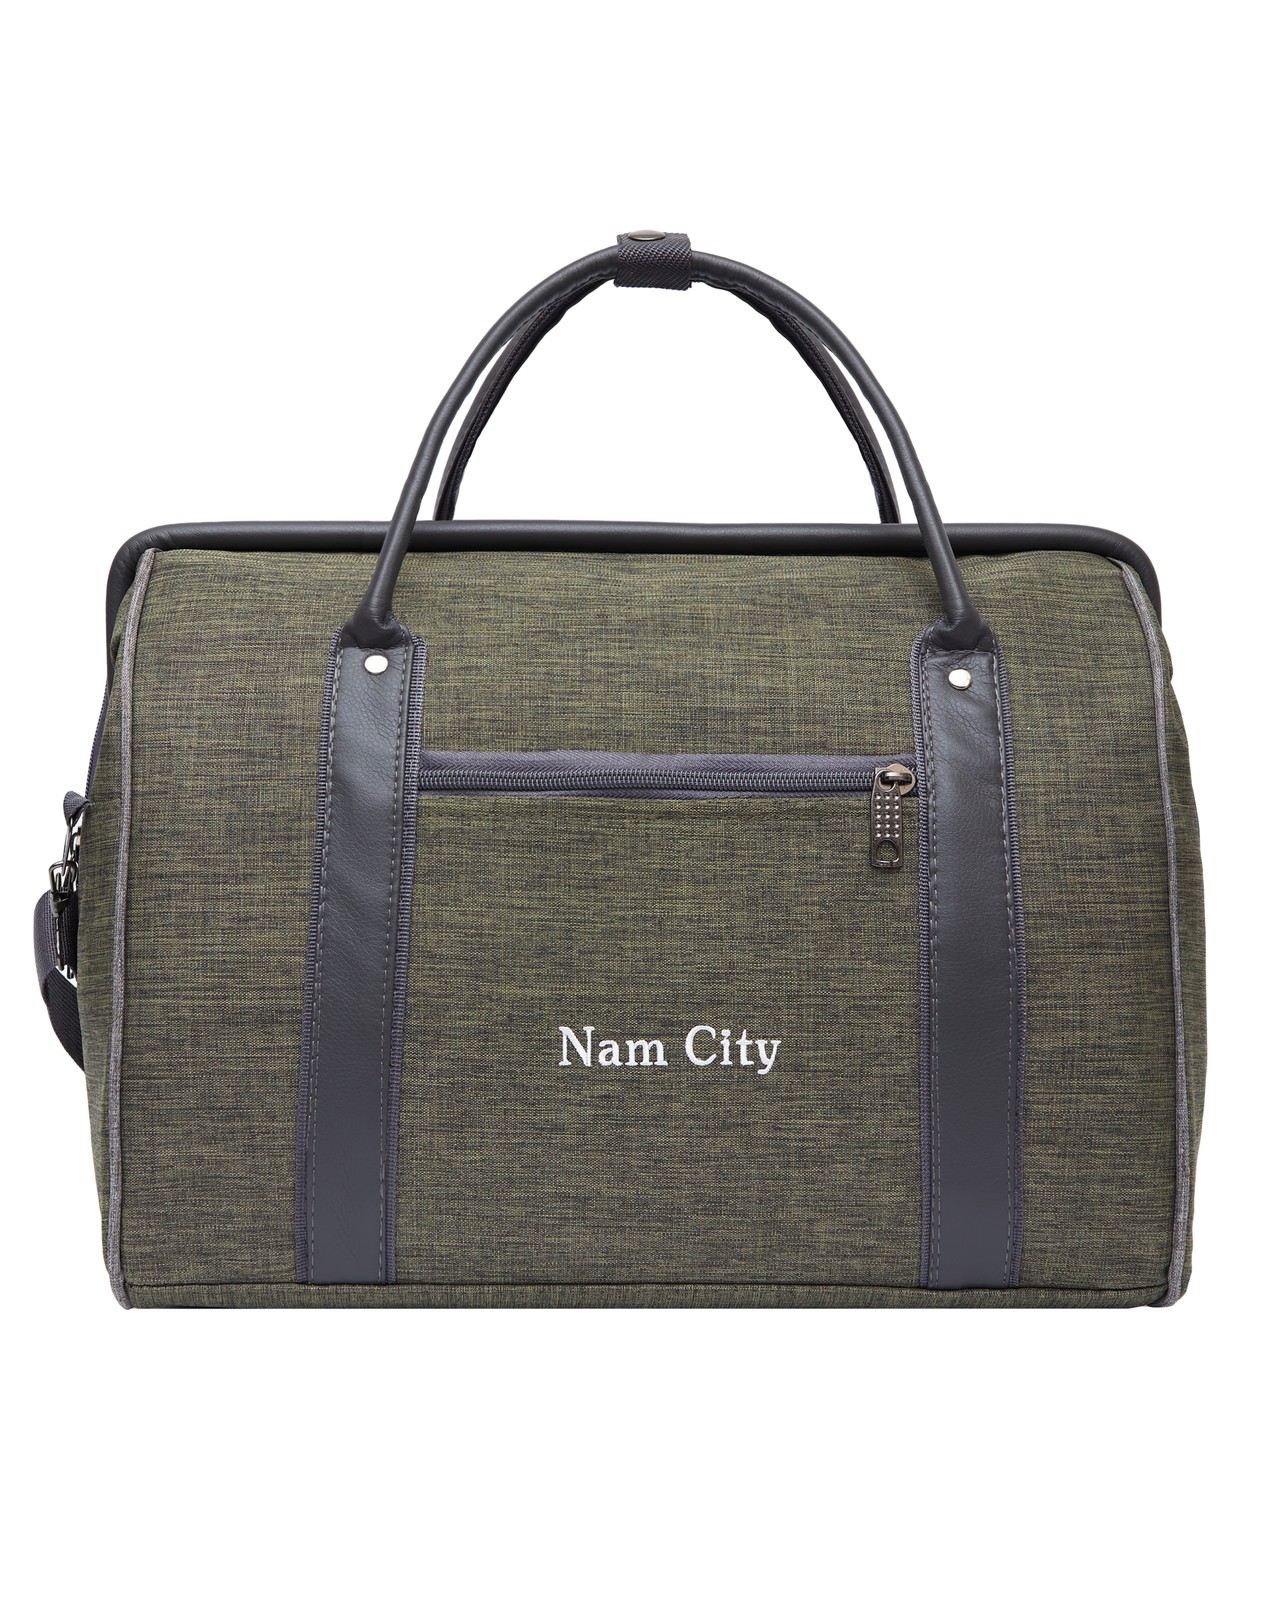 Дорожная сумка унисекс Nam City NC 40 хаки, 30x40x20 см